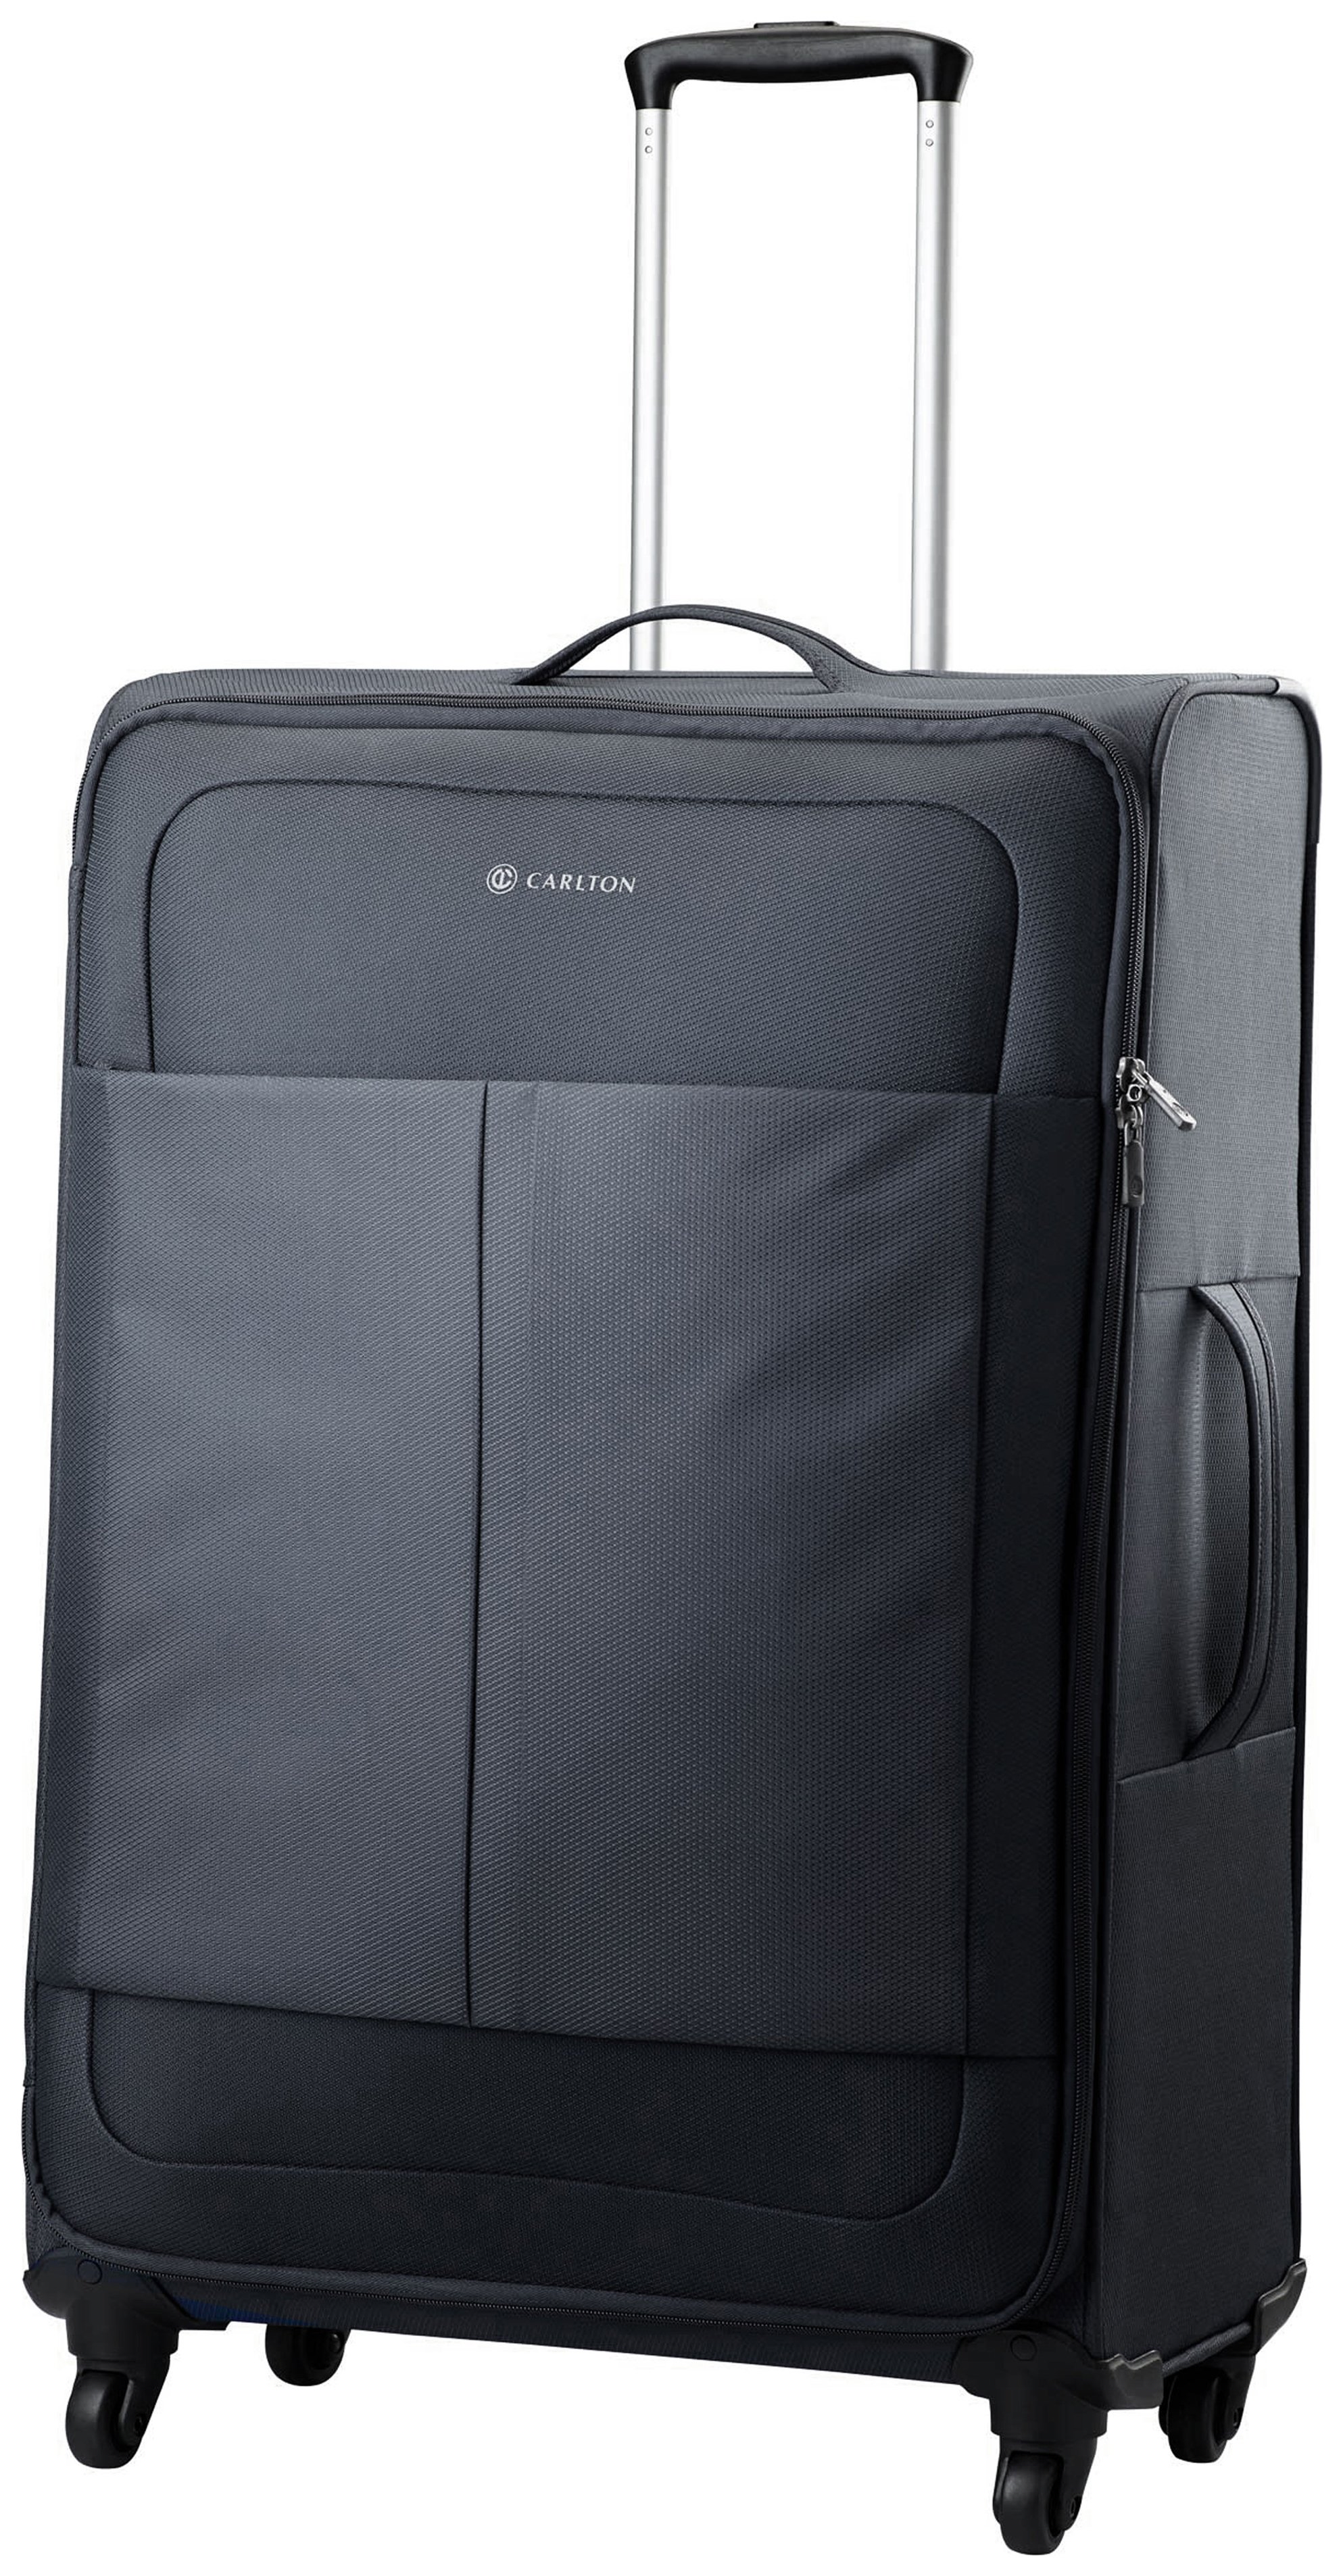 'Carlton - Ultralite Large 4 Wheel Soft Suitcase - Black